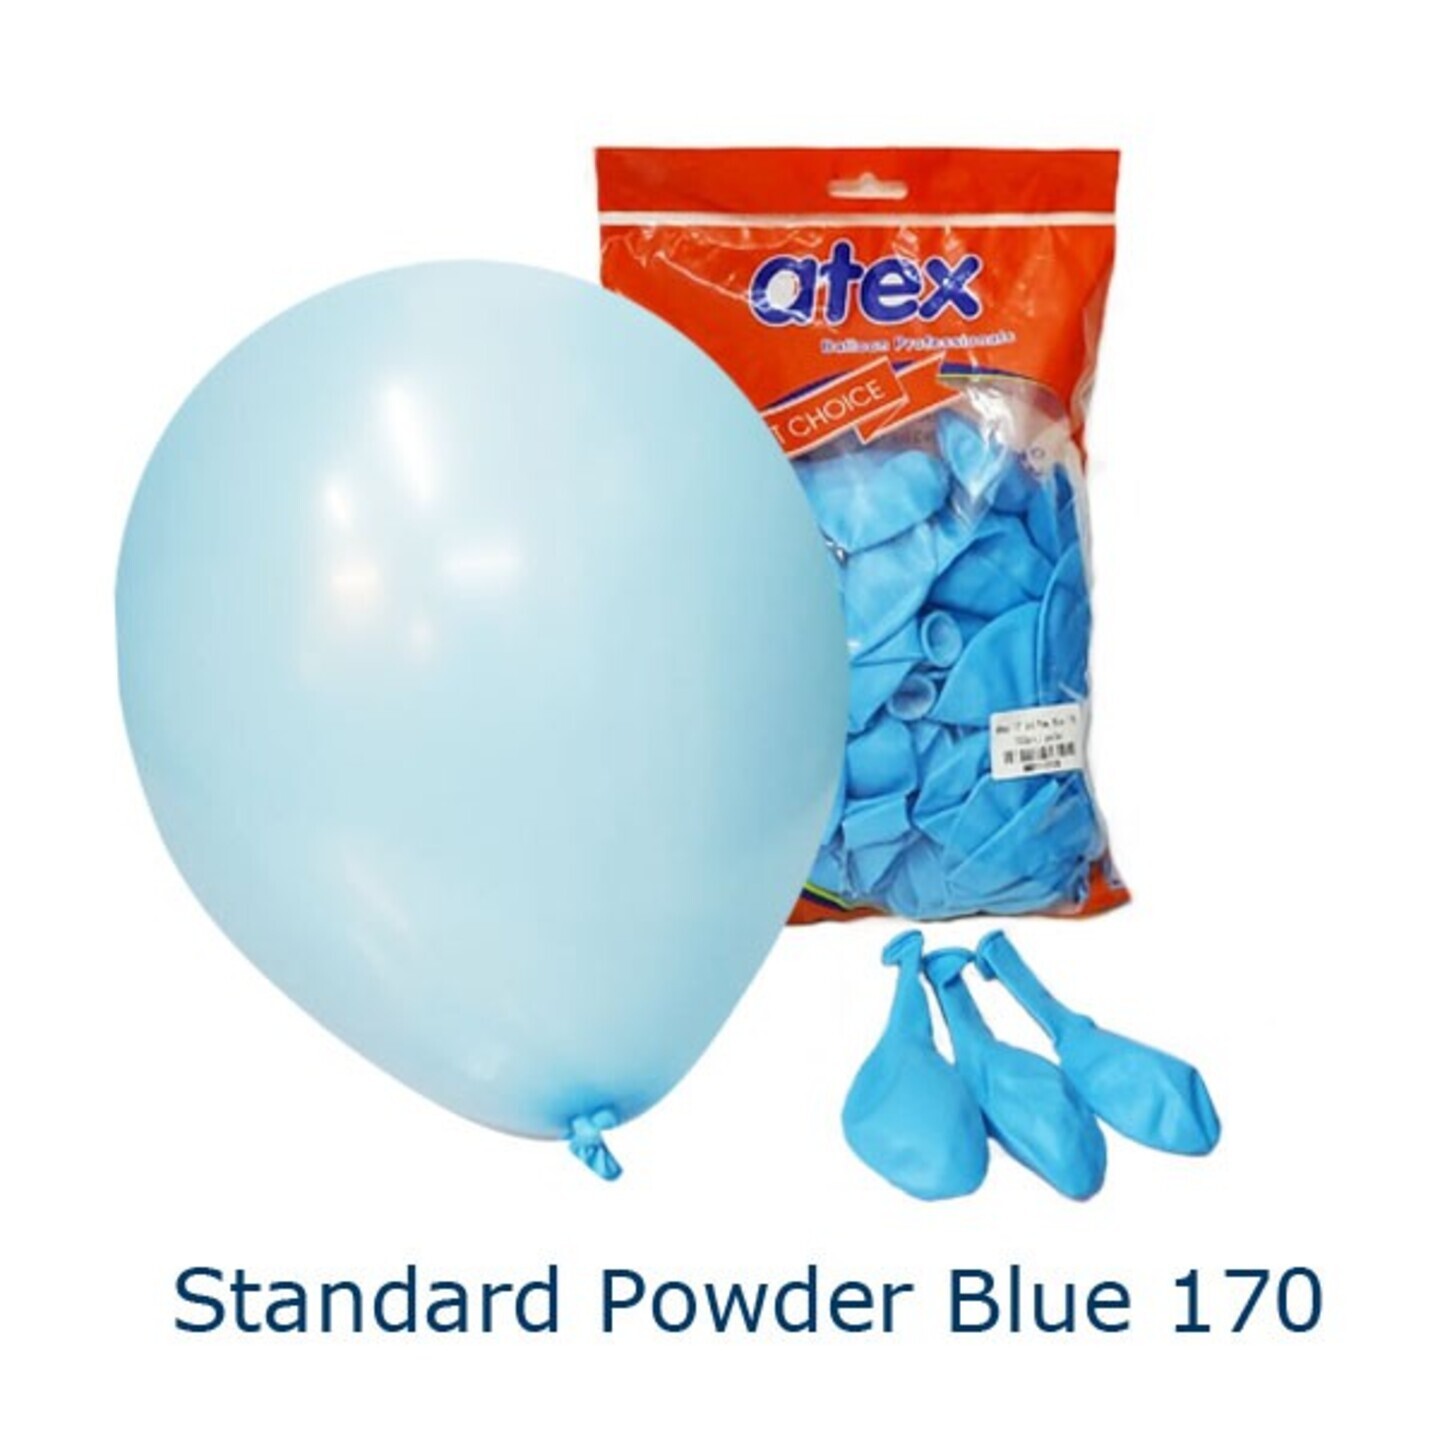 Standard Powder Blue 170